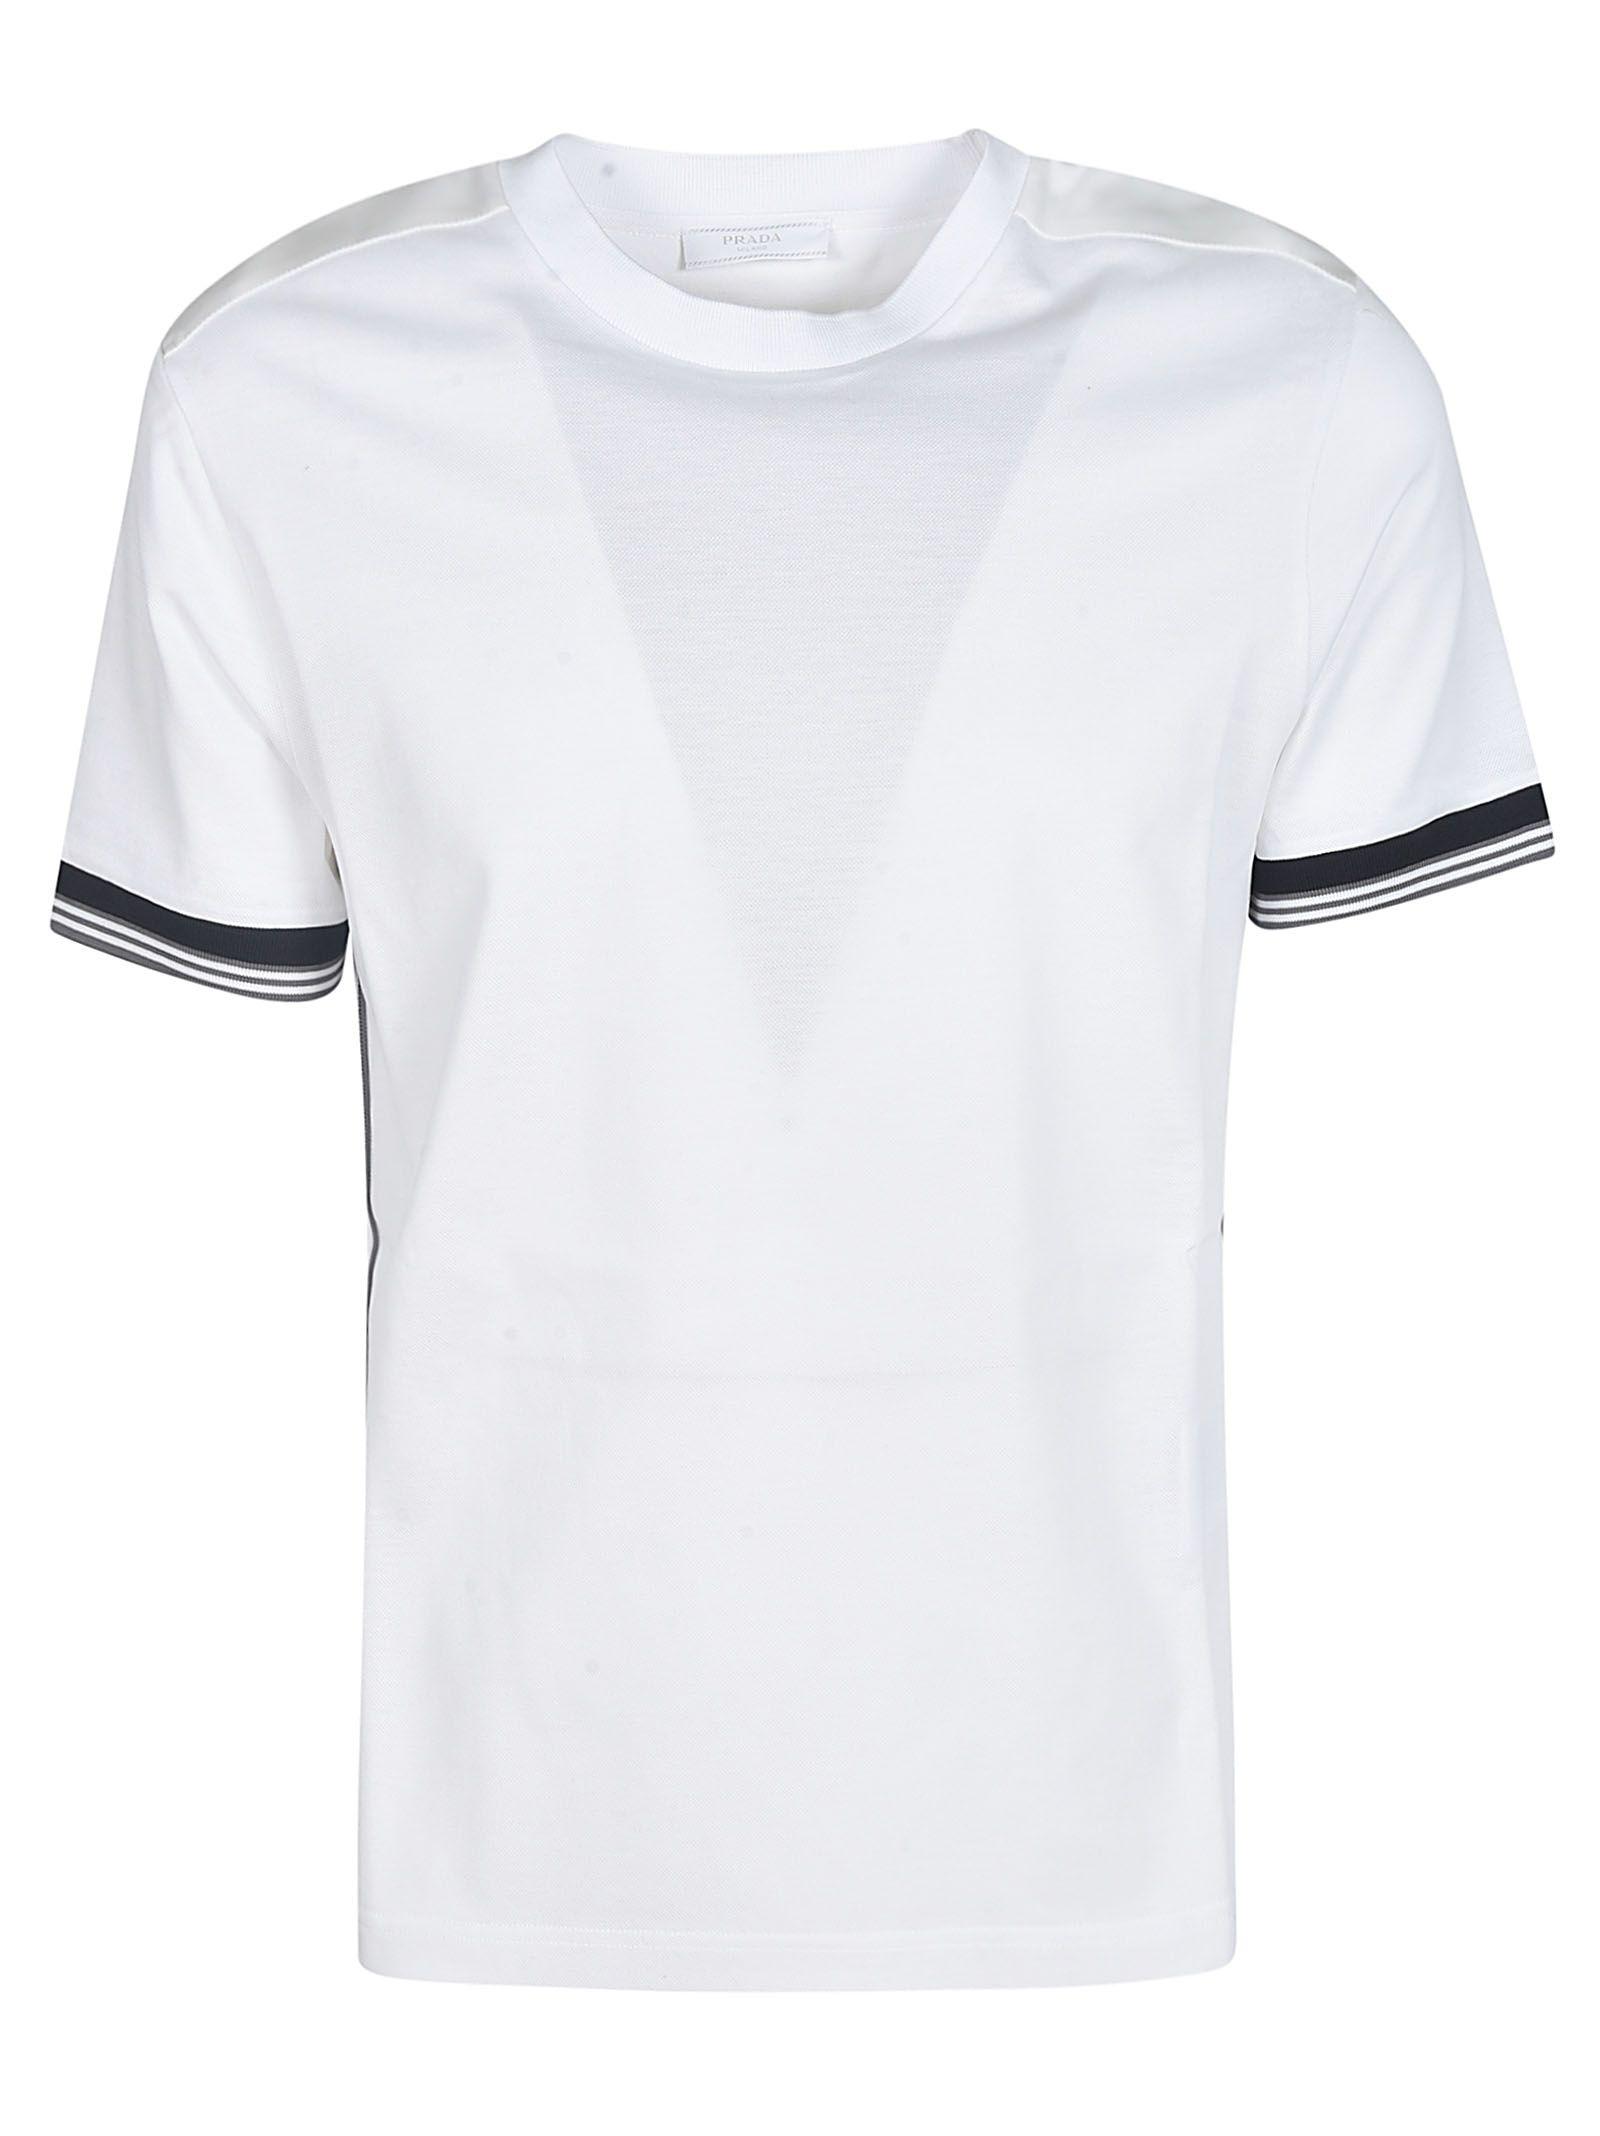 Prada Cotton T-shirt in White for Men - Lyst